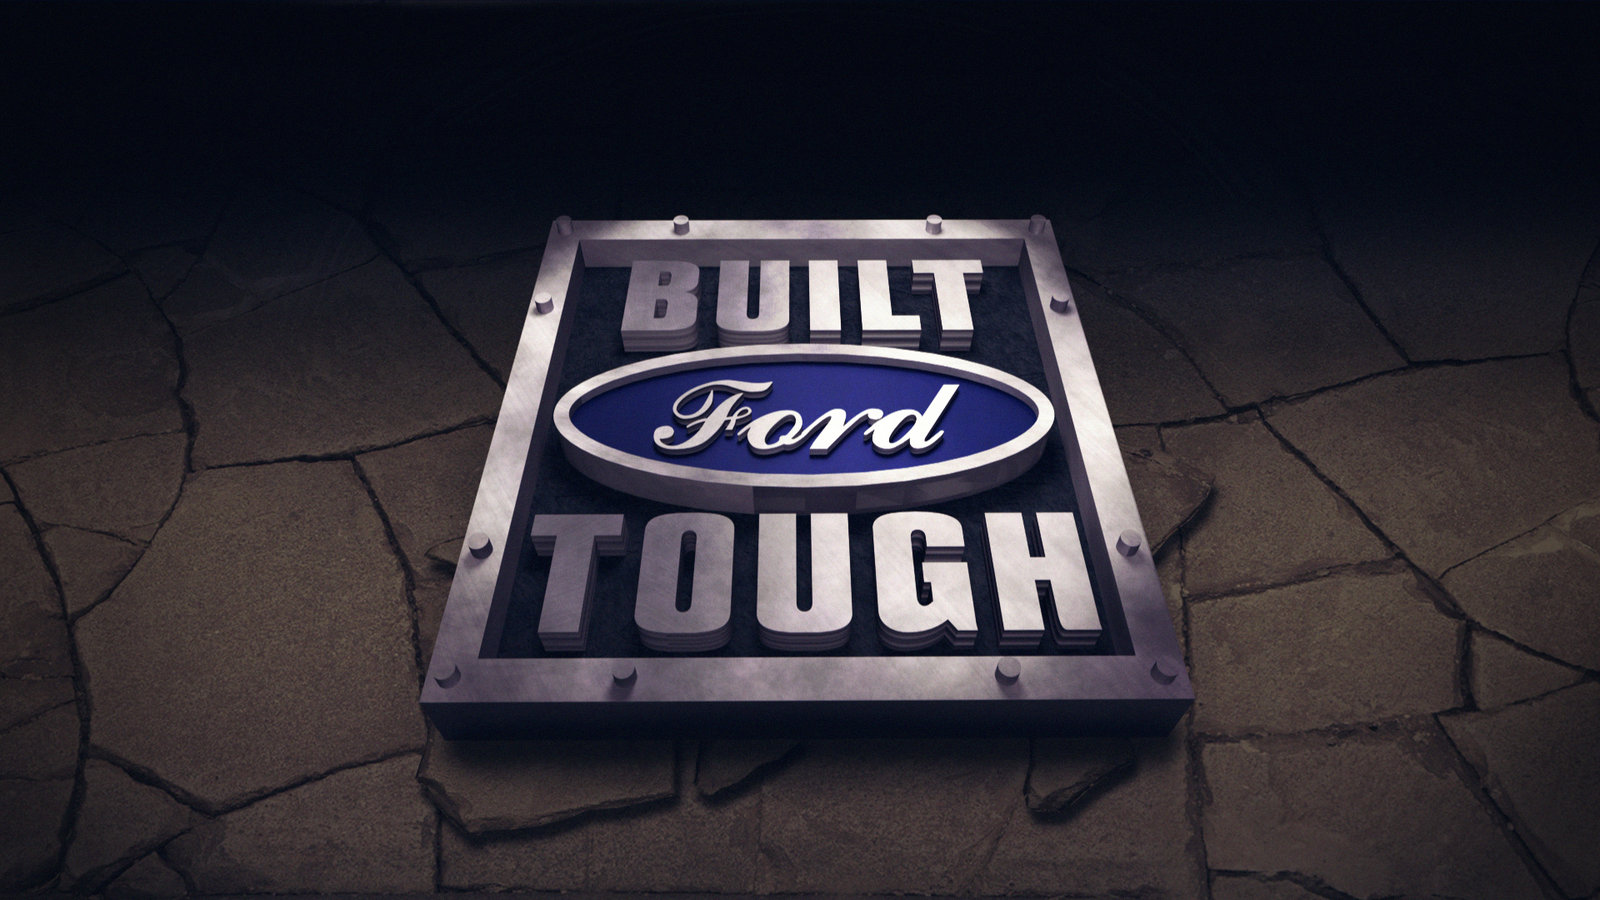 Built Ford Tough Wallpaper Image For